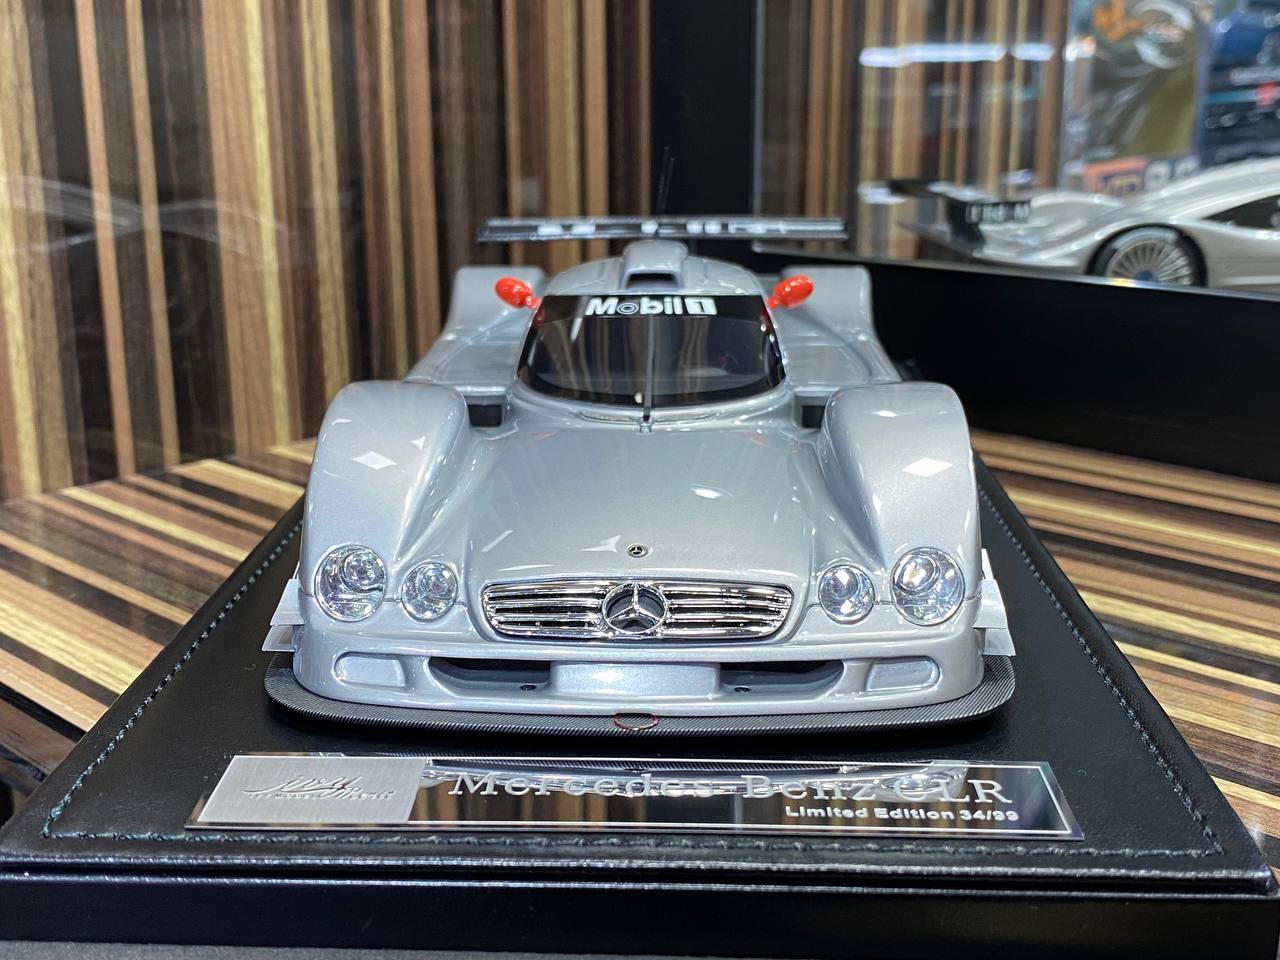 1/18 Diecast Mercedes-Benz CLR IVY Models Scale Model Car|Sold in Dturman.com Dubai UAE.